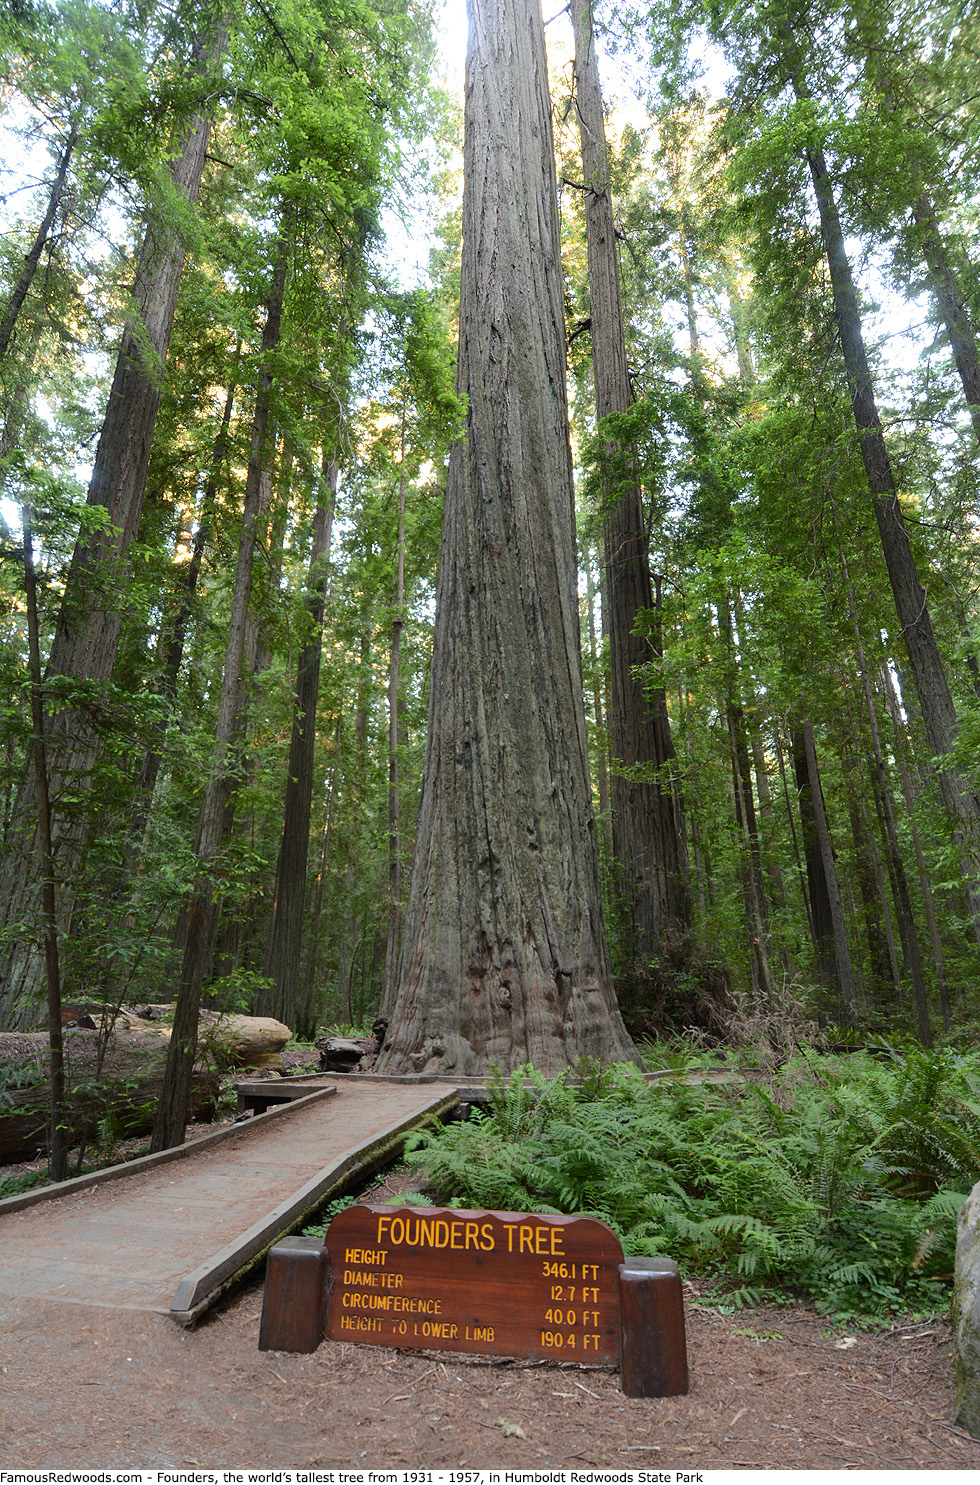 Humboldt Redwoods State Park - Founders Tree